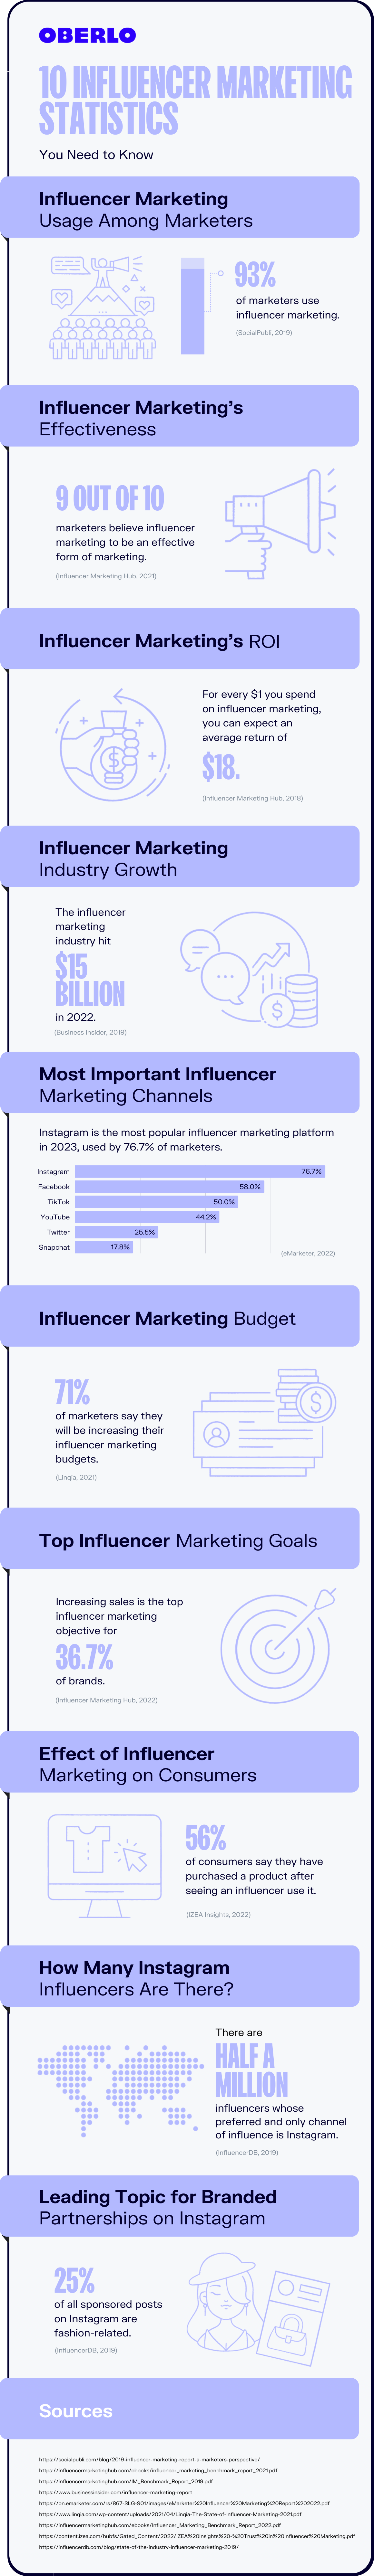 influencer marketing statistics full infographic